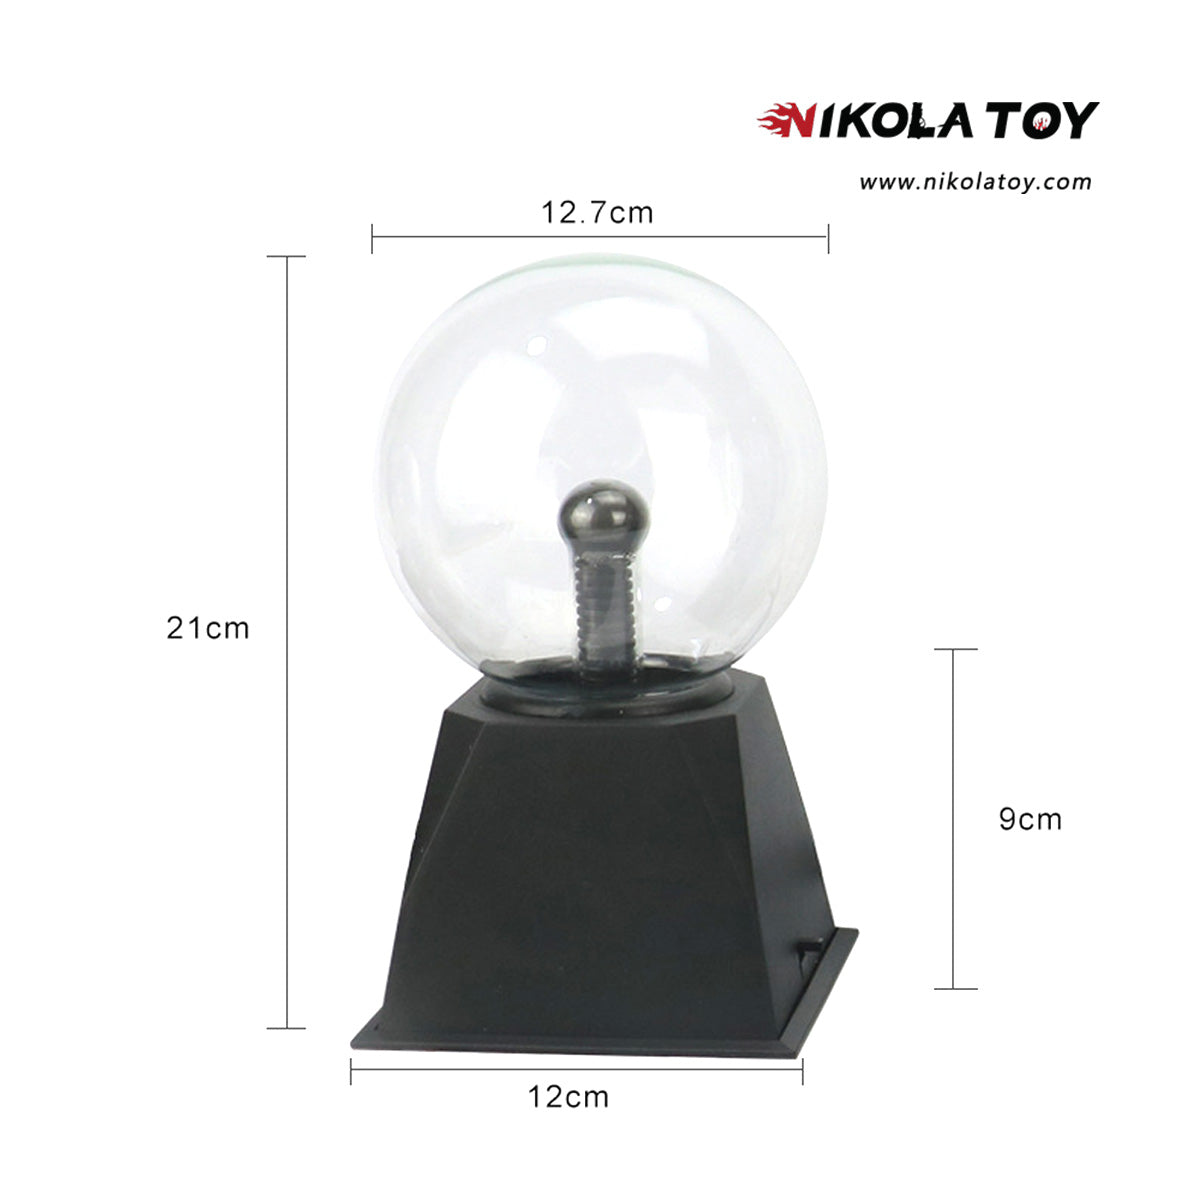 Upgraded voice controlled magic ball - Nikola Toy